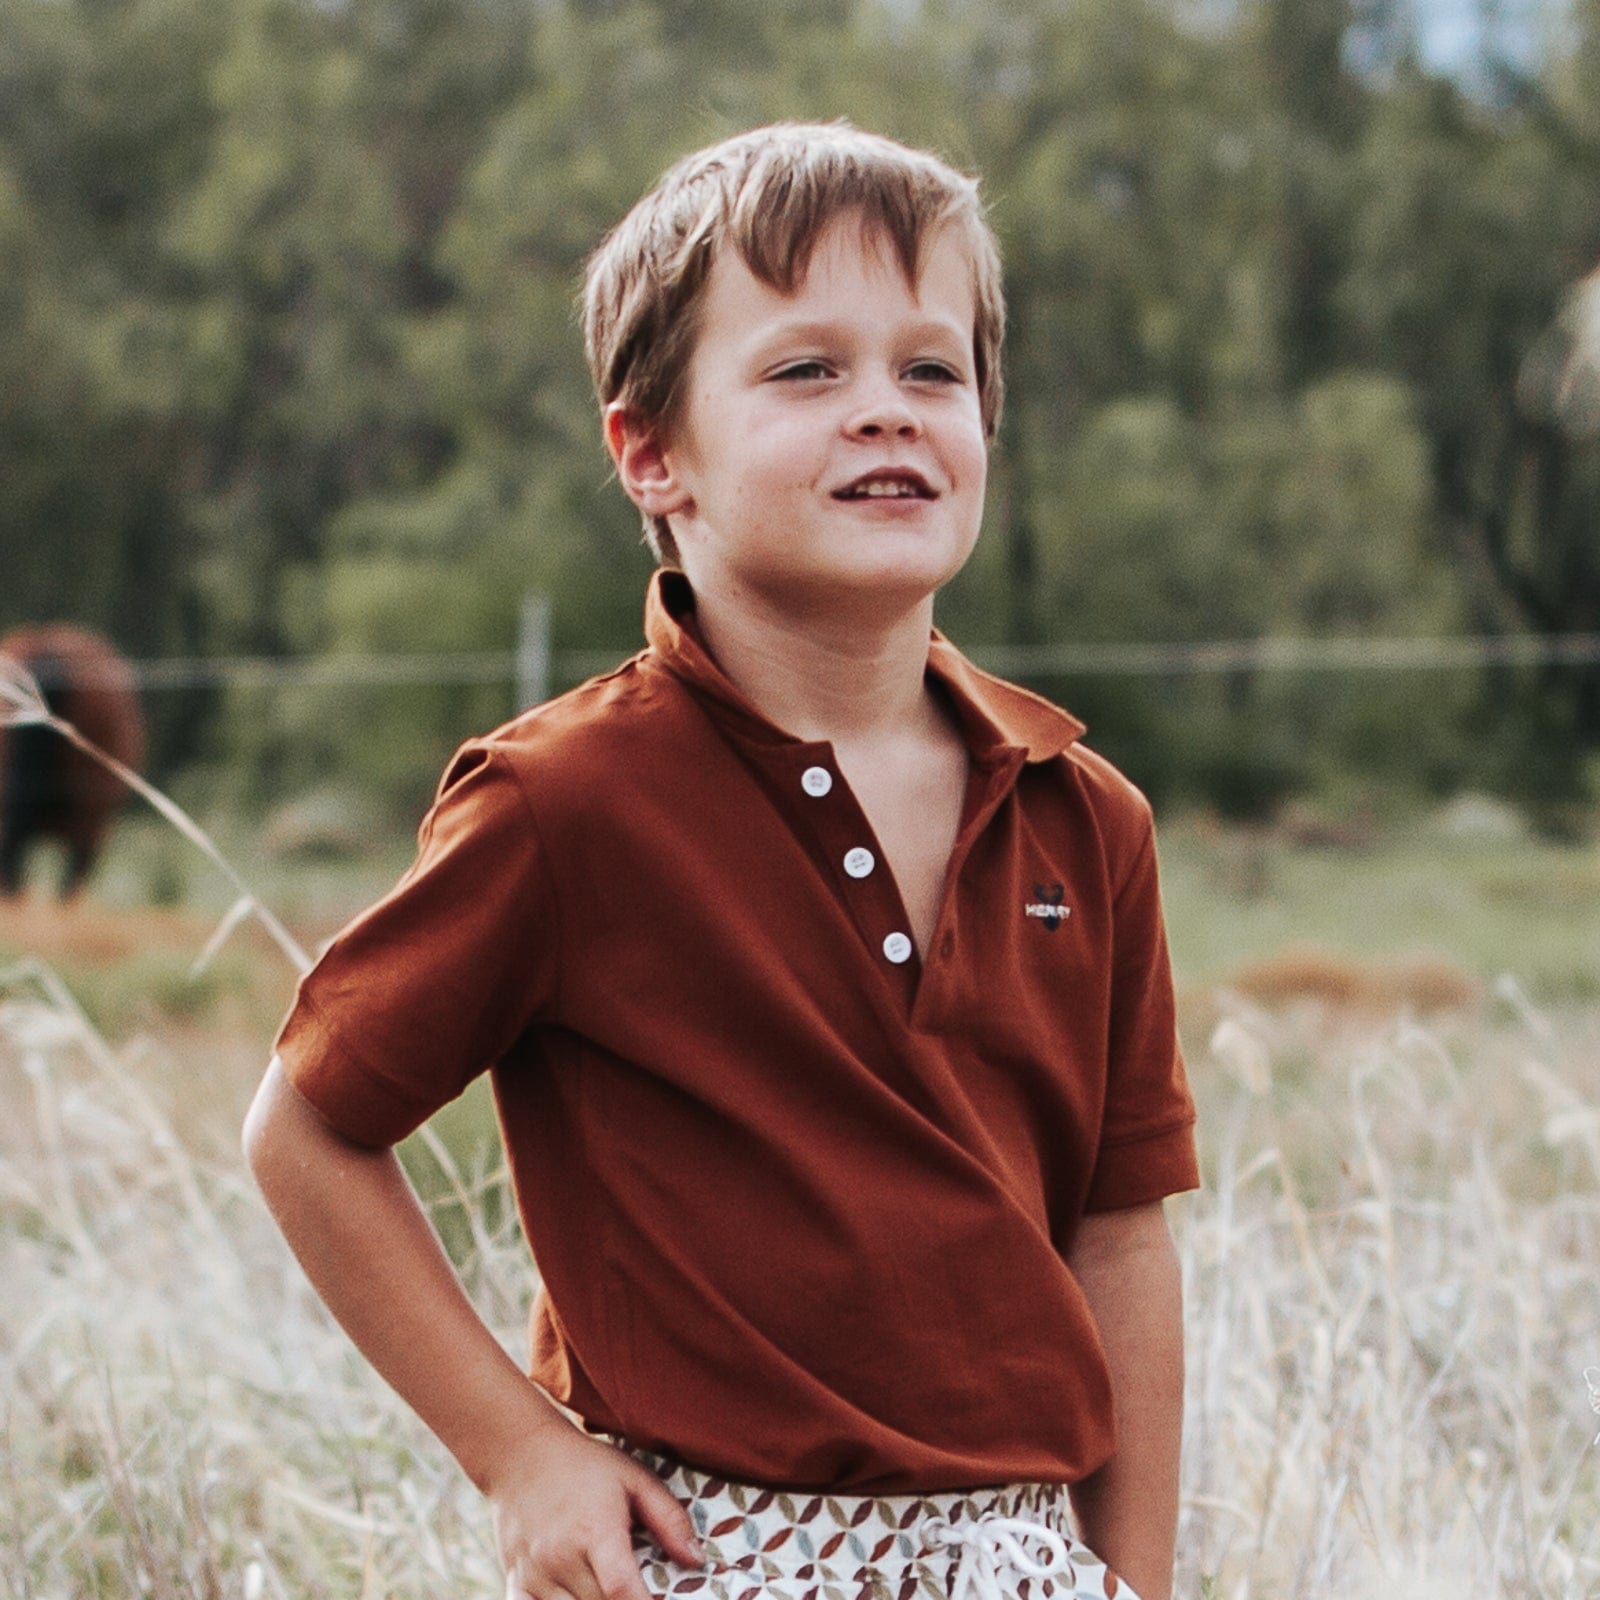 Love Henry Tops Boys Polo Shirt - Bronze